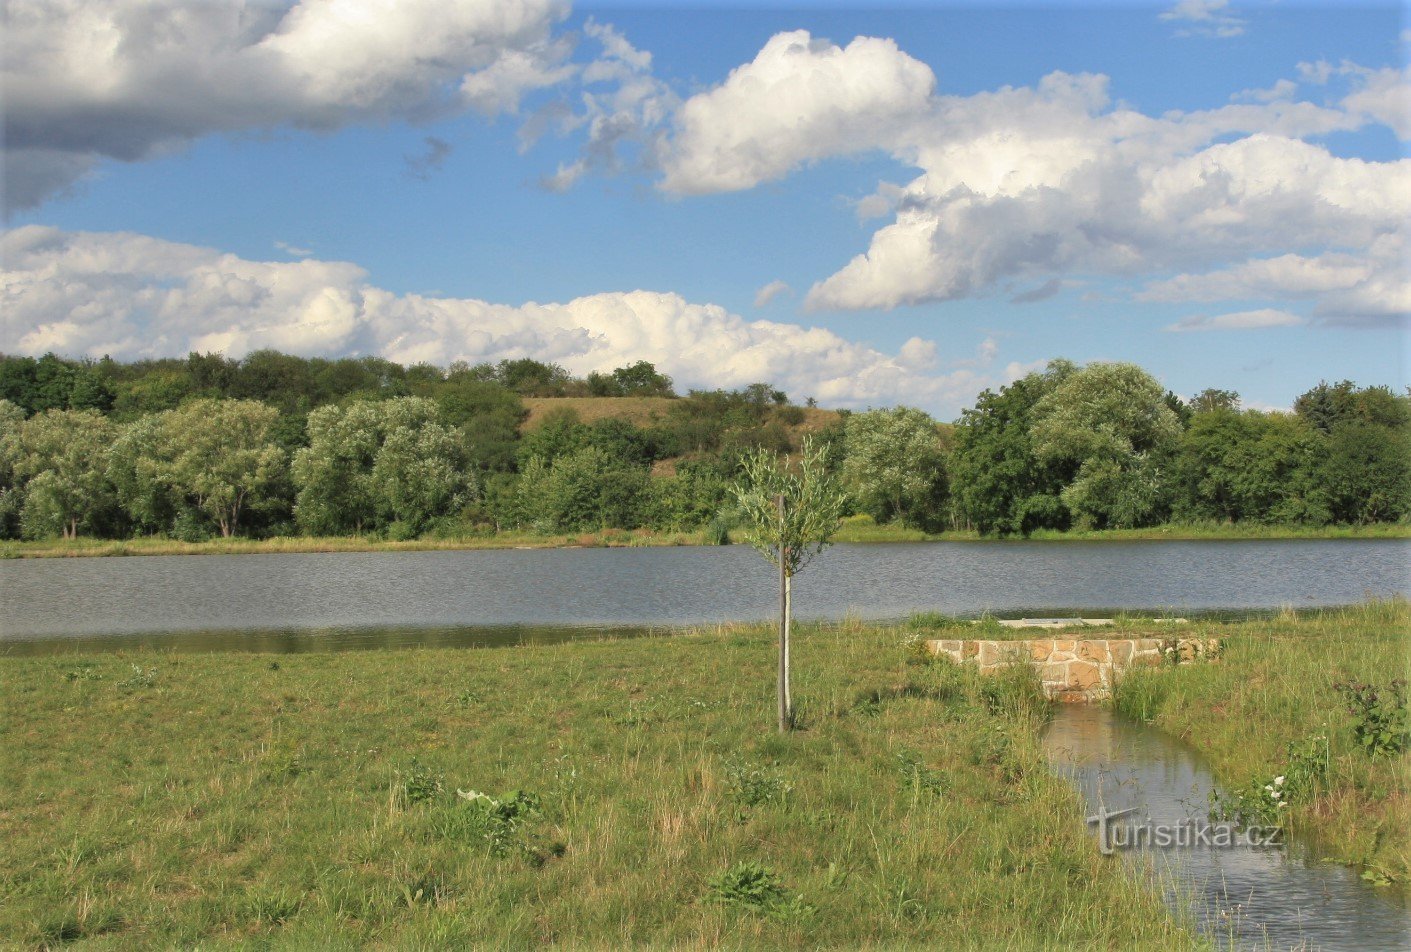 On the side above the Habřina wetland